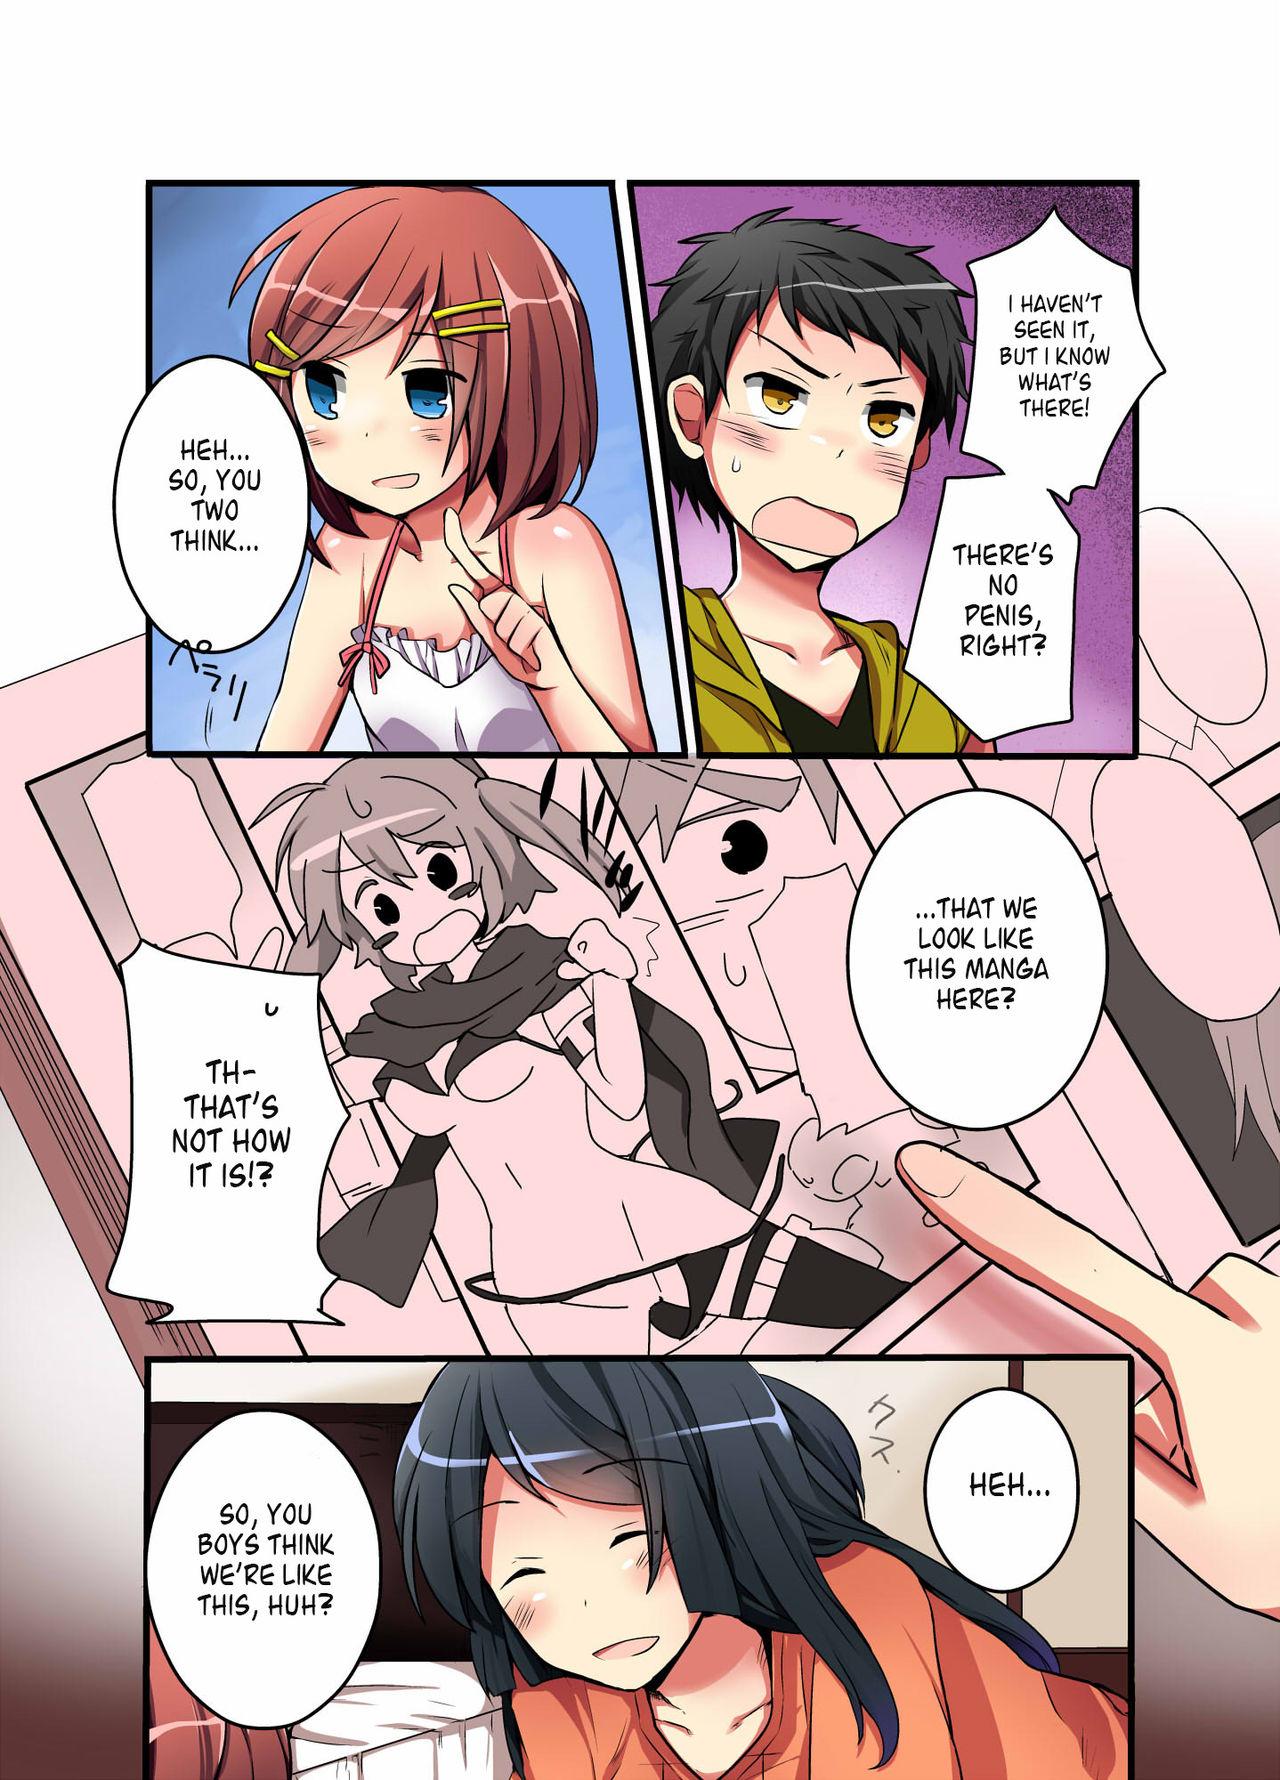 [Shinenkan] Joutaihenka Manga vol. 2 ~Onnanoko no Asoko wa dou natterun no? Hen~ | Transformation Comics vol. 2 ~What's the Deal with Girl's Privates?~ [English] 7